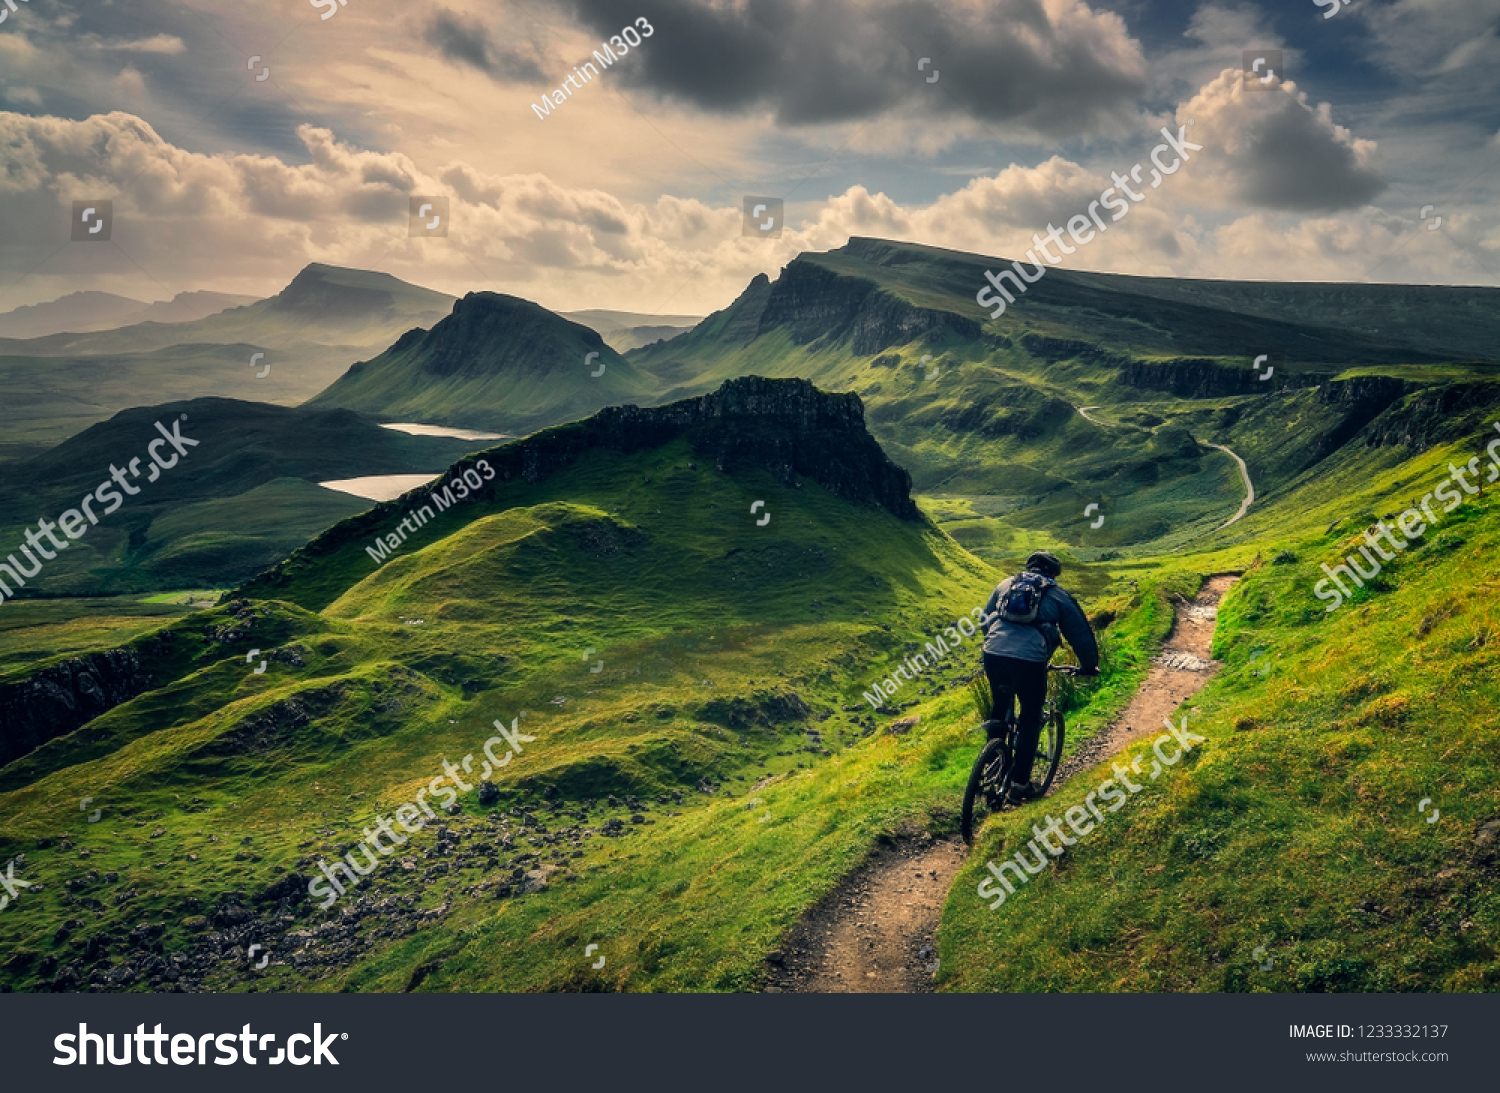 Mountain biker riding through rough mountain landscape of Quiraing, Isle of Skye, Scotland, UK #1233332137